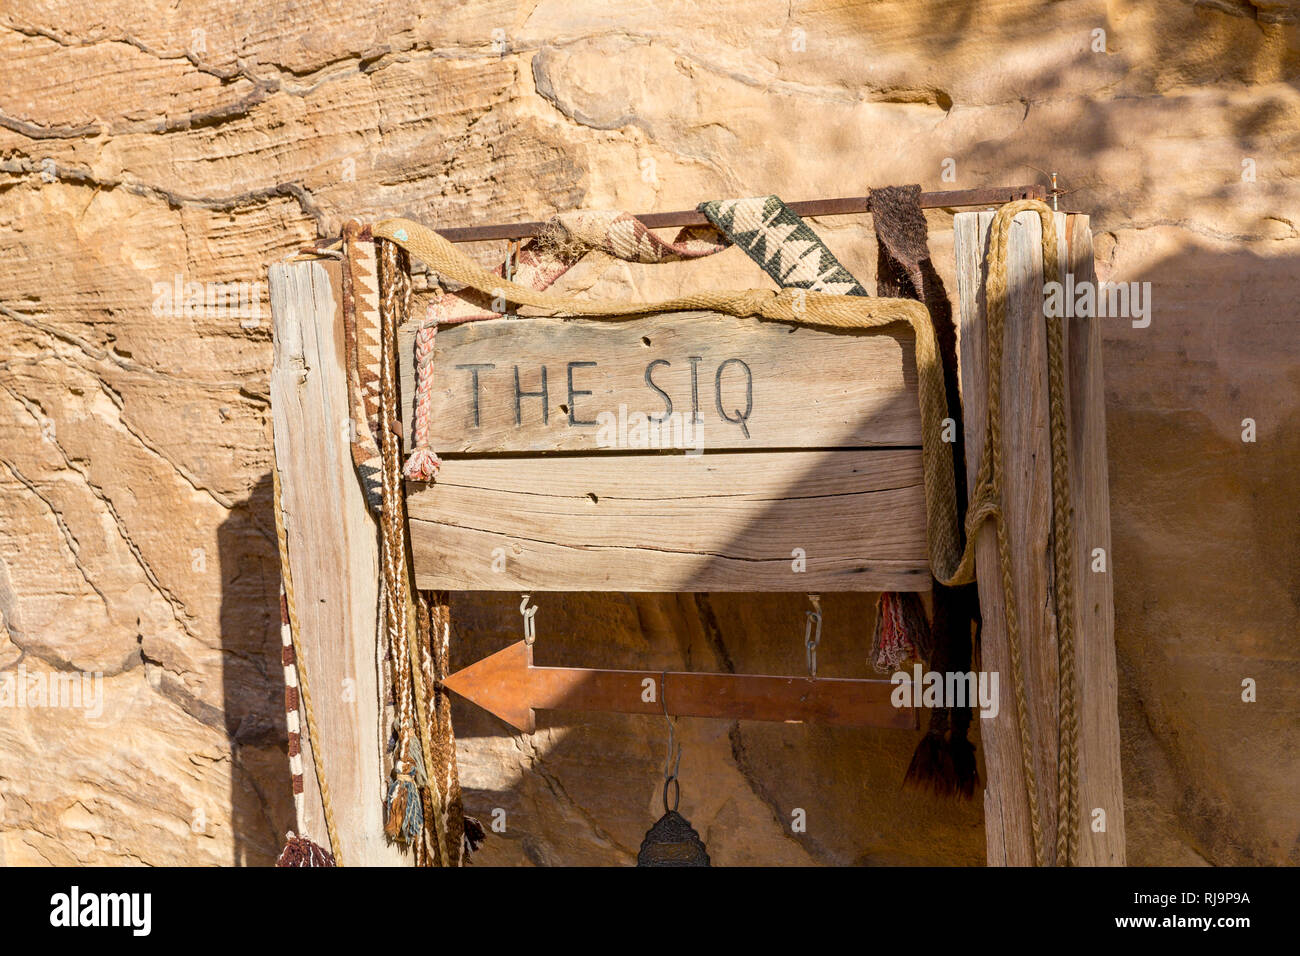 Eingangsschild, Der Sik, Siq, Felsschlucht, Petra Wadi Musa, Nabatäer Hauptstadt, UNESCO Weltkulturerbe, Jordanien, Asien Foto Stock